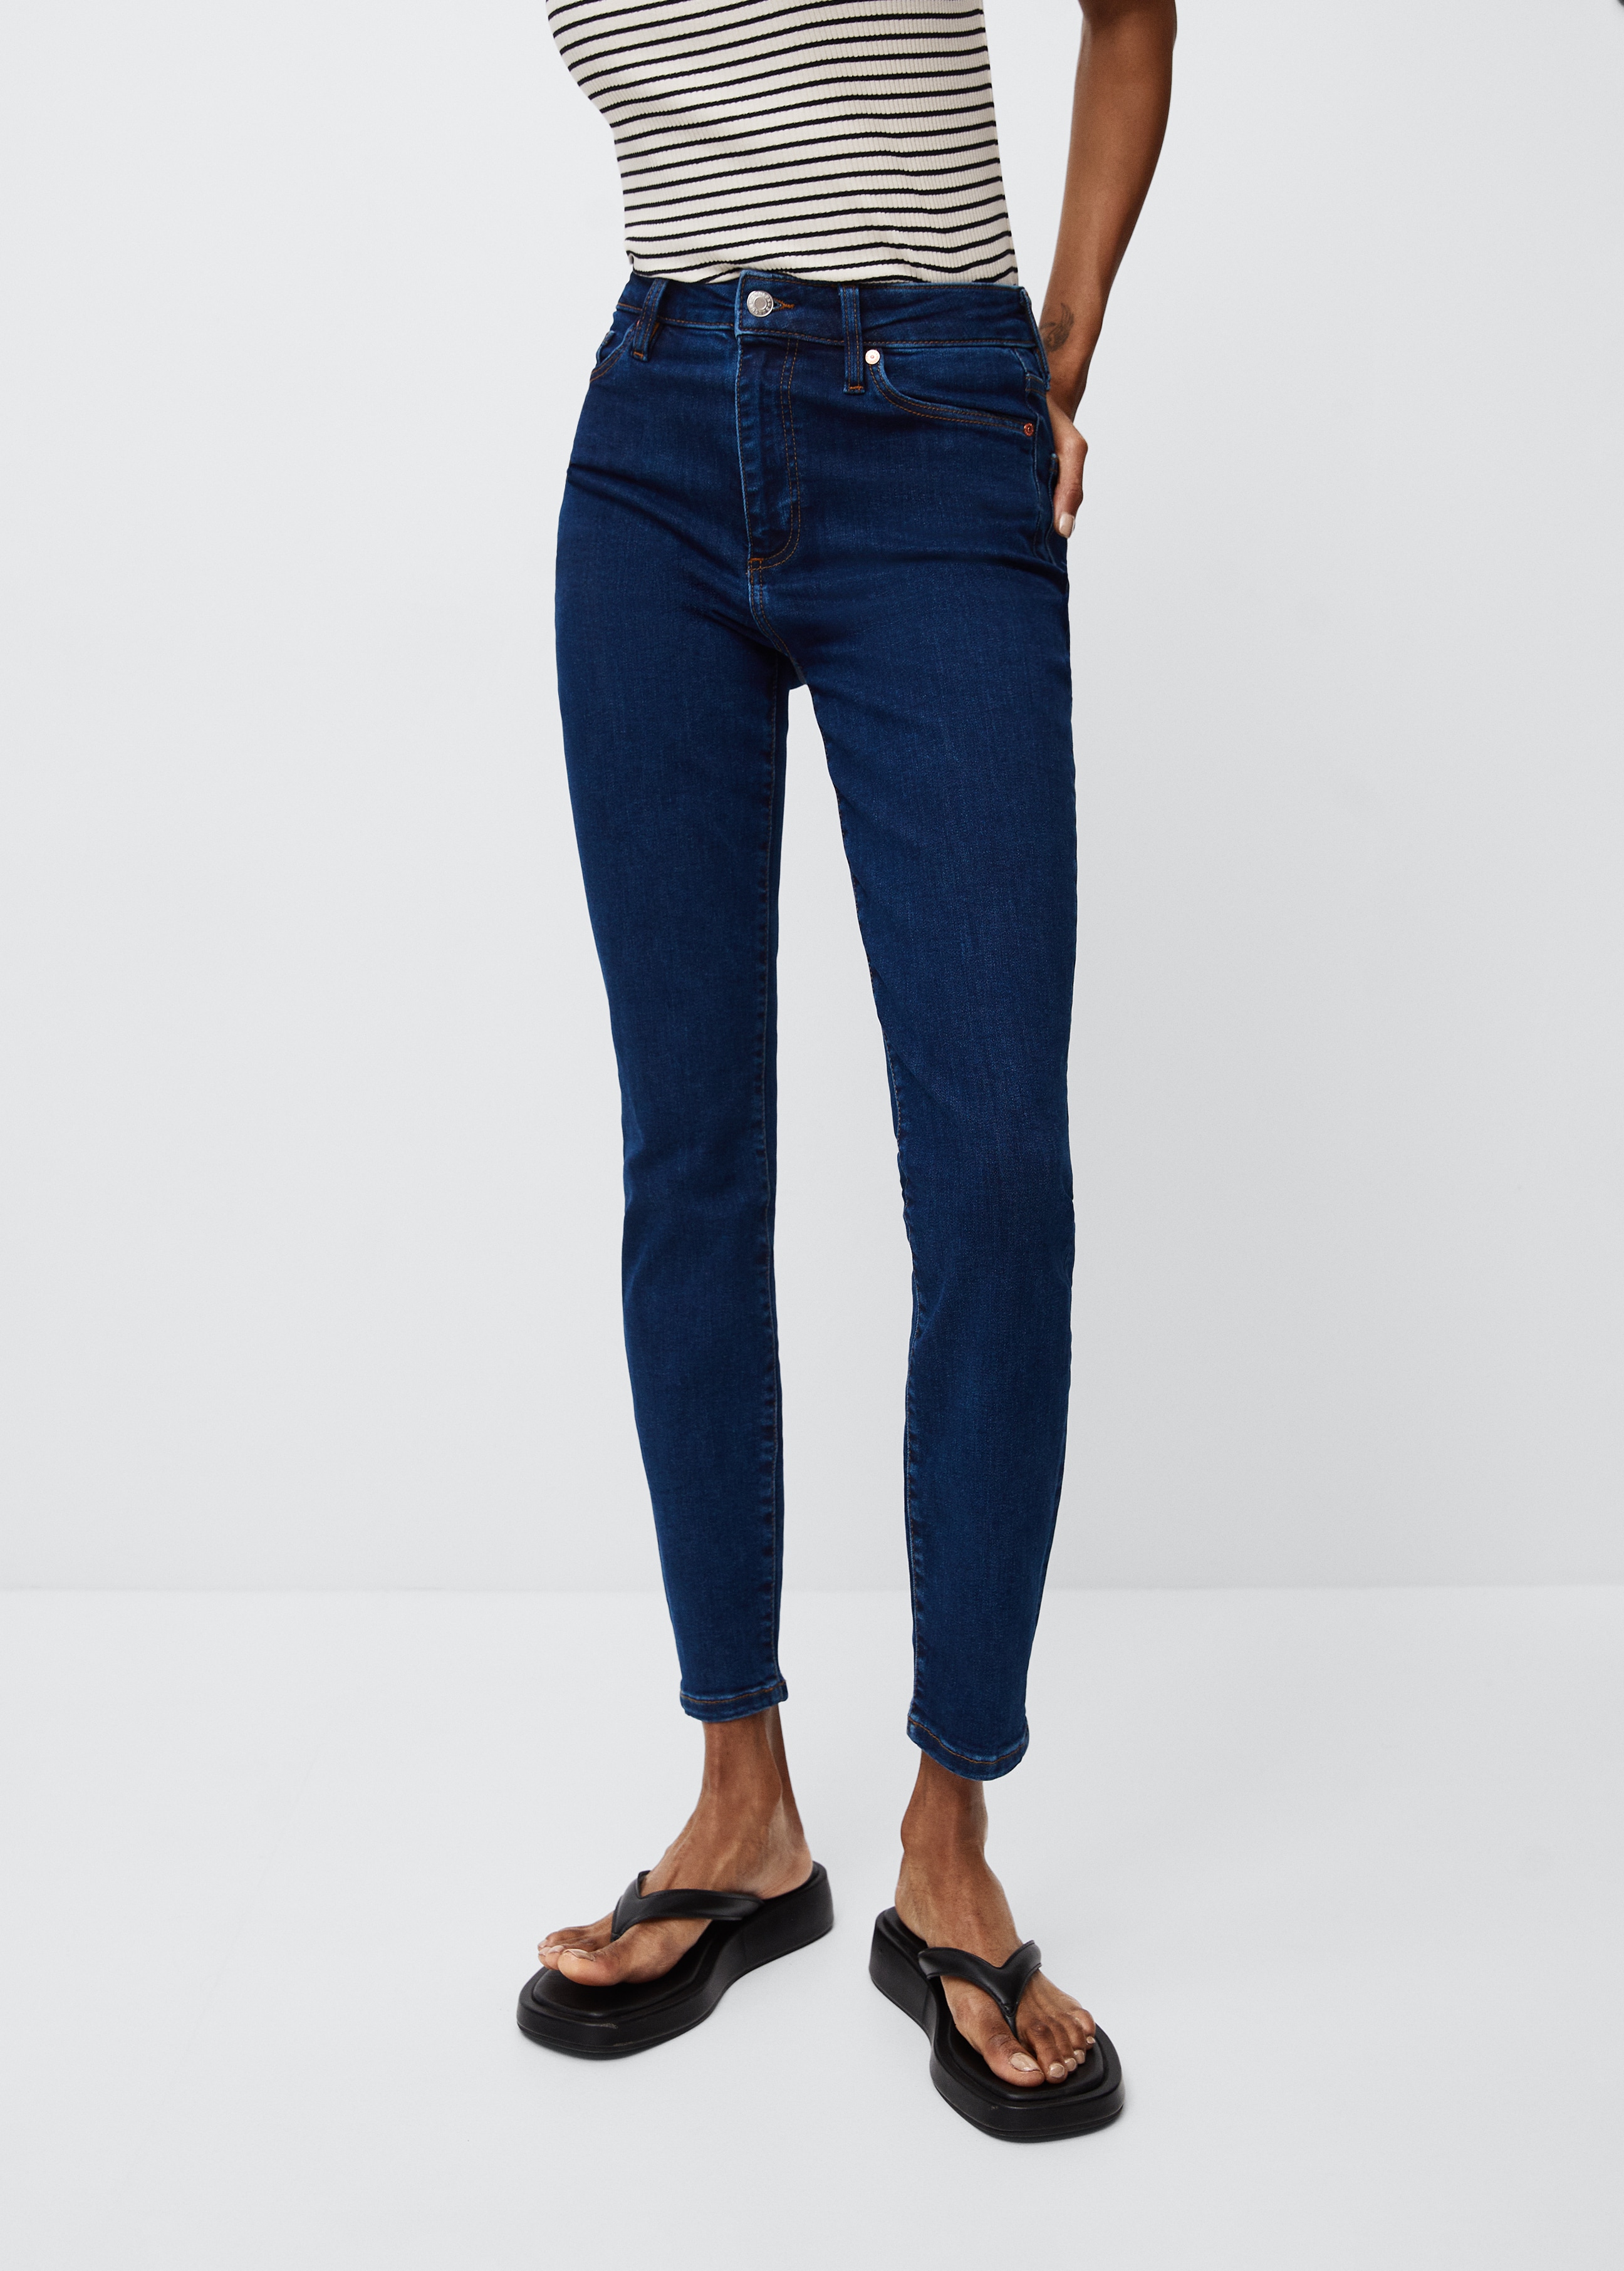 Jeans skinny tiro alto  - Plano medio